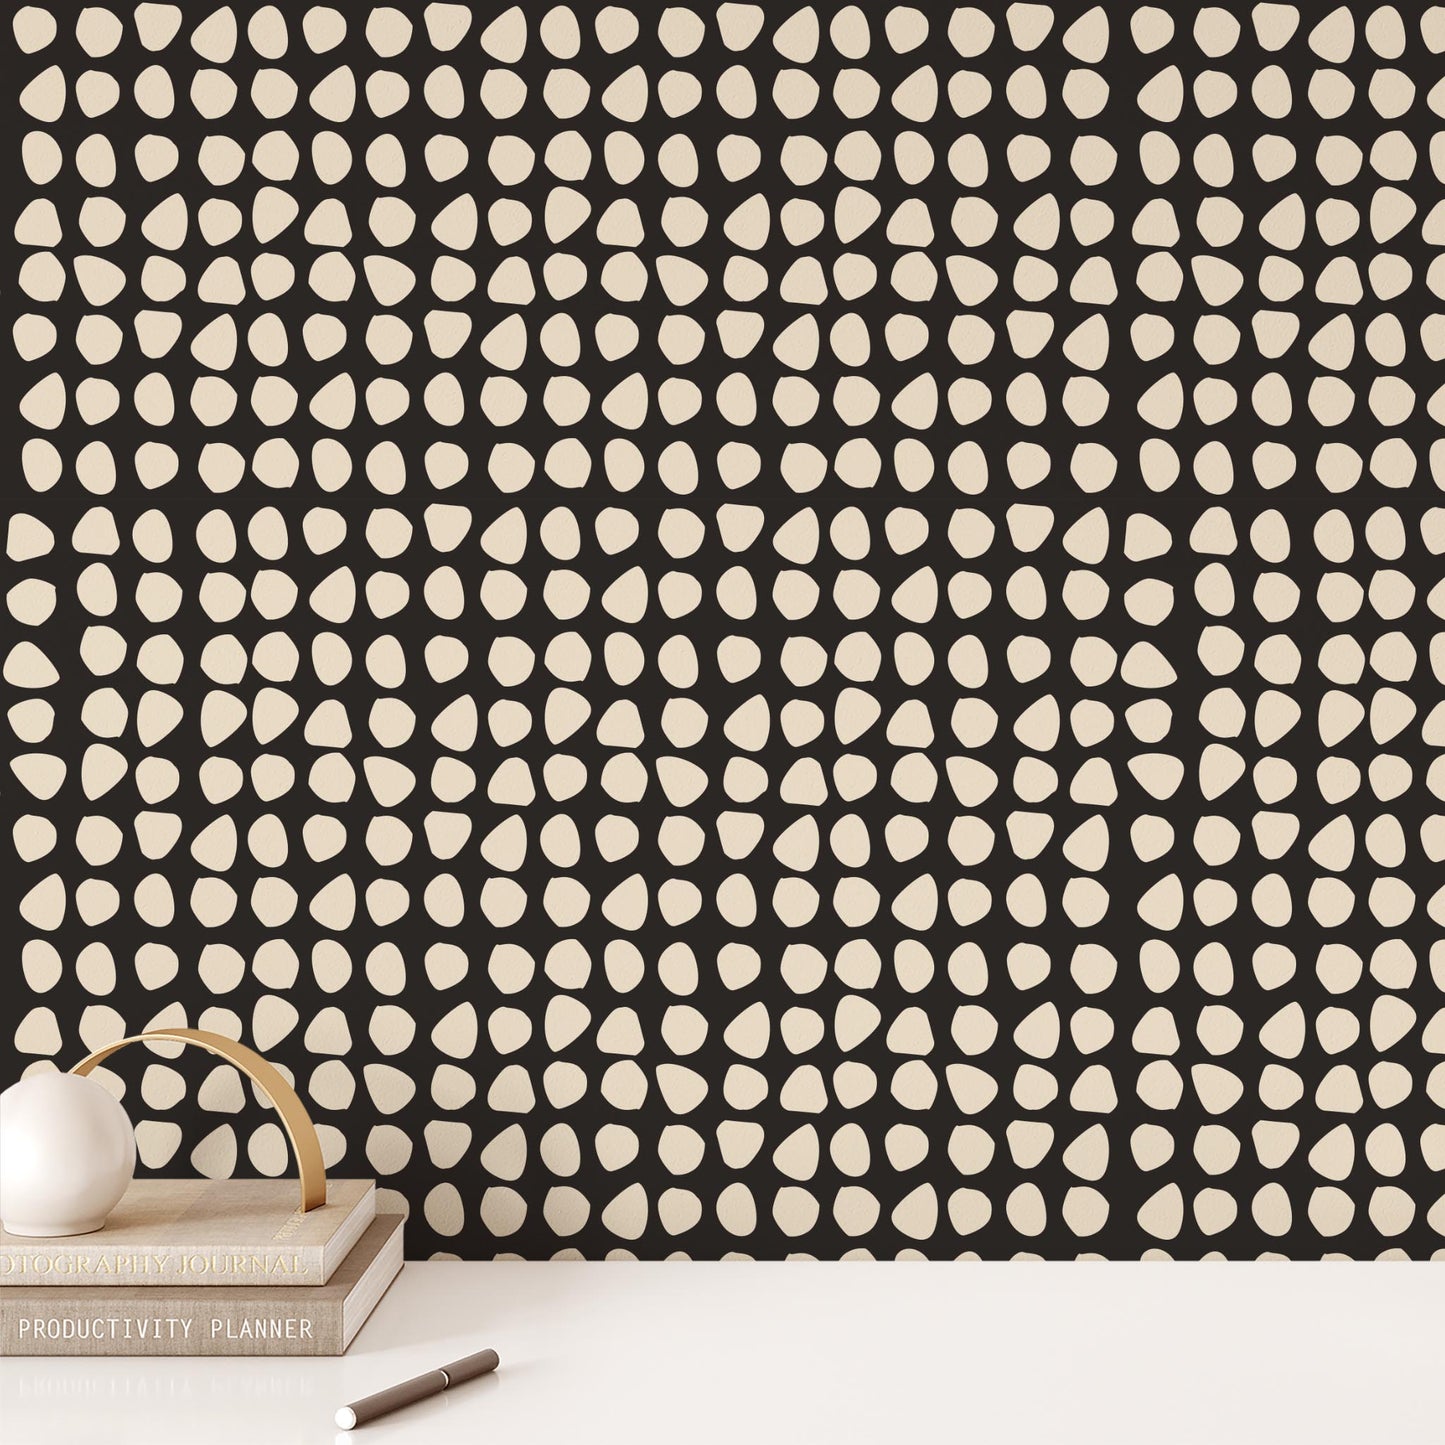 Office preview of Organic Dots Wallpaper in Black by artist Brenda Bird